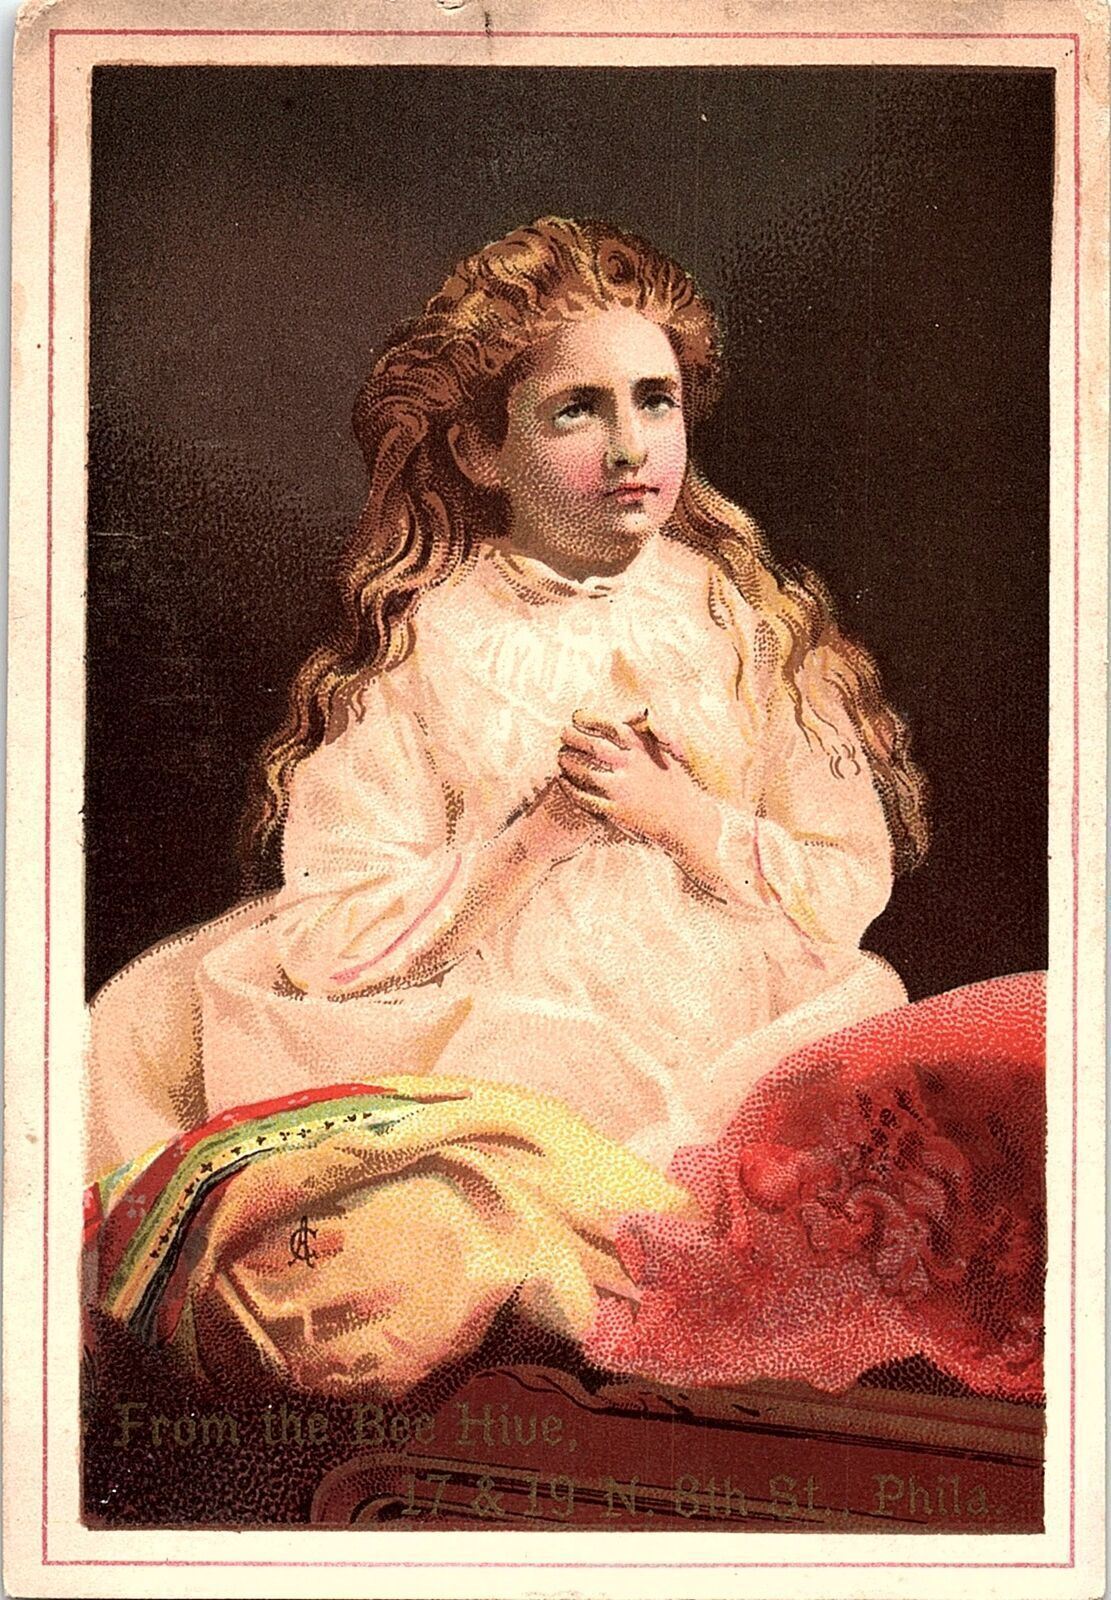 c1880 PHILADELPHIA PA THE BEE HIVE VICTORIAN GIRL ADVERTISING TRADE CARD 41-139